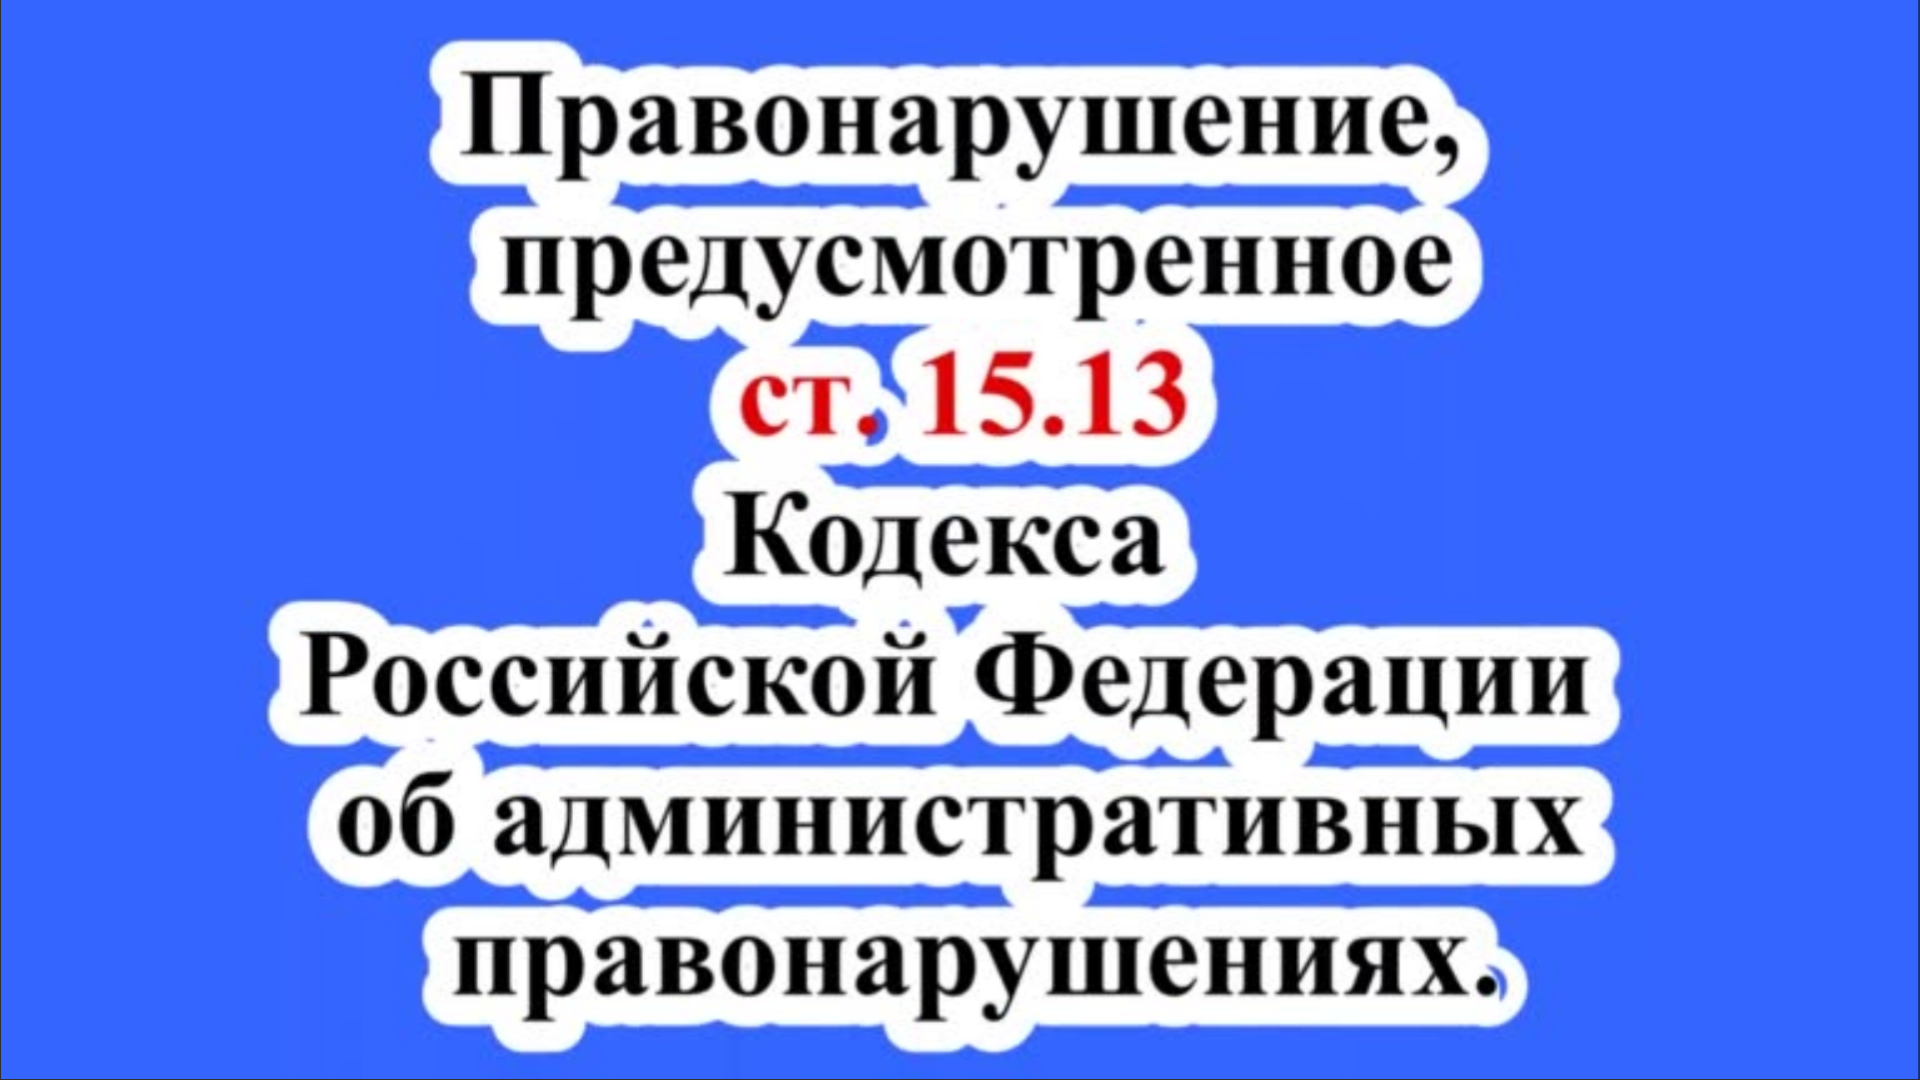 Правонарушение, предусмотренное ст. 15.13 КоАП РФ.